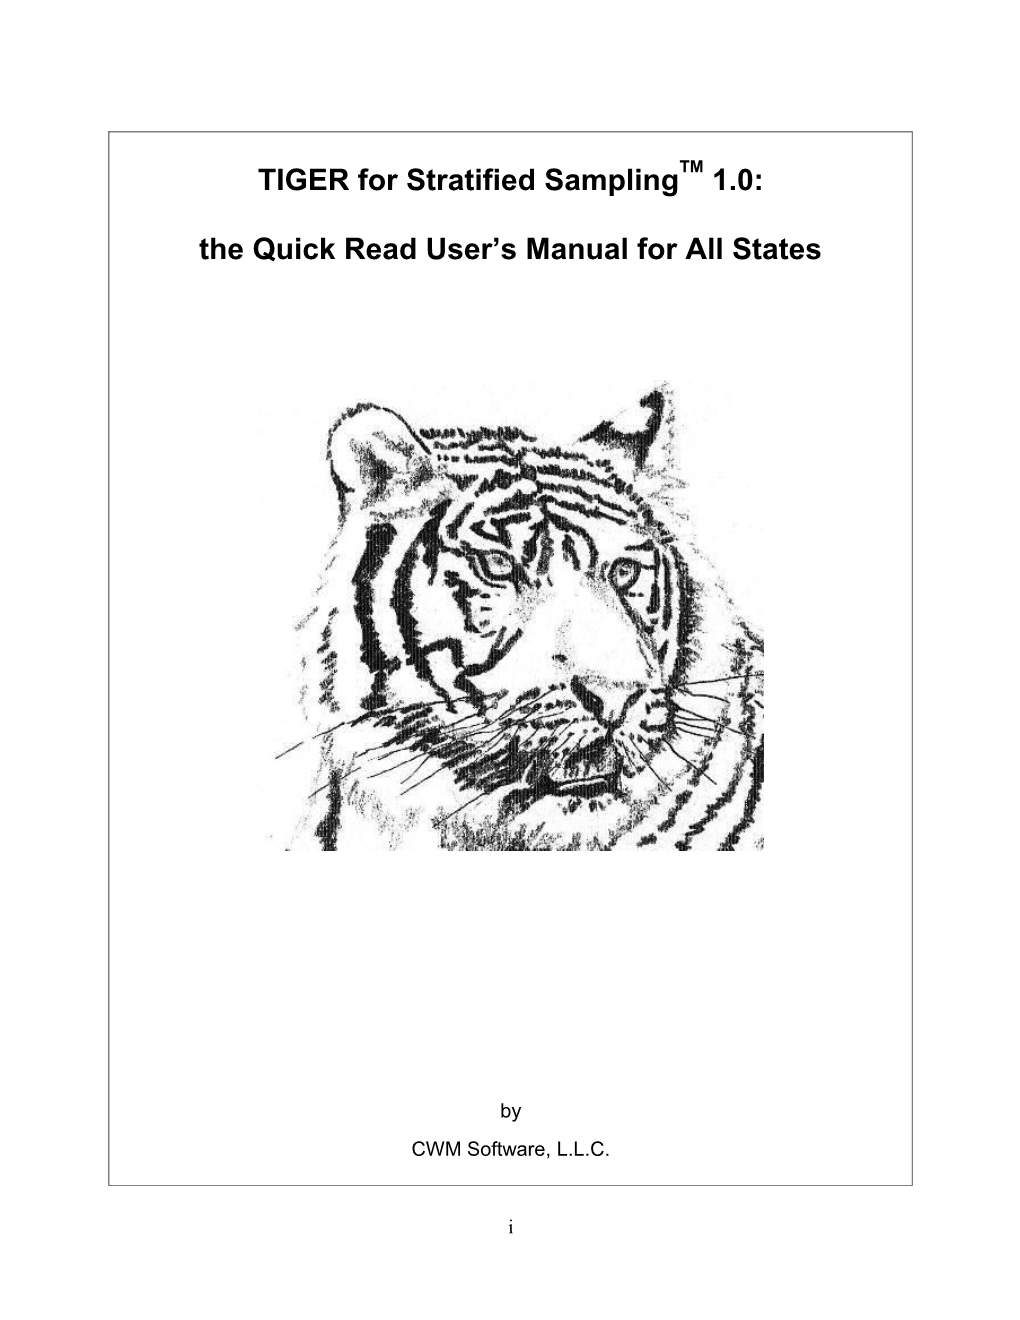 Wisconsin TIGER 2.1 Manual